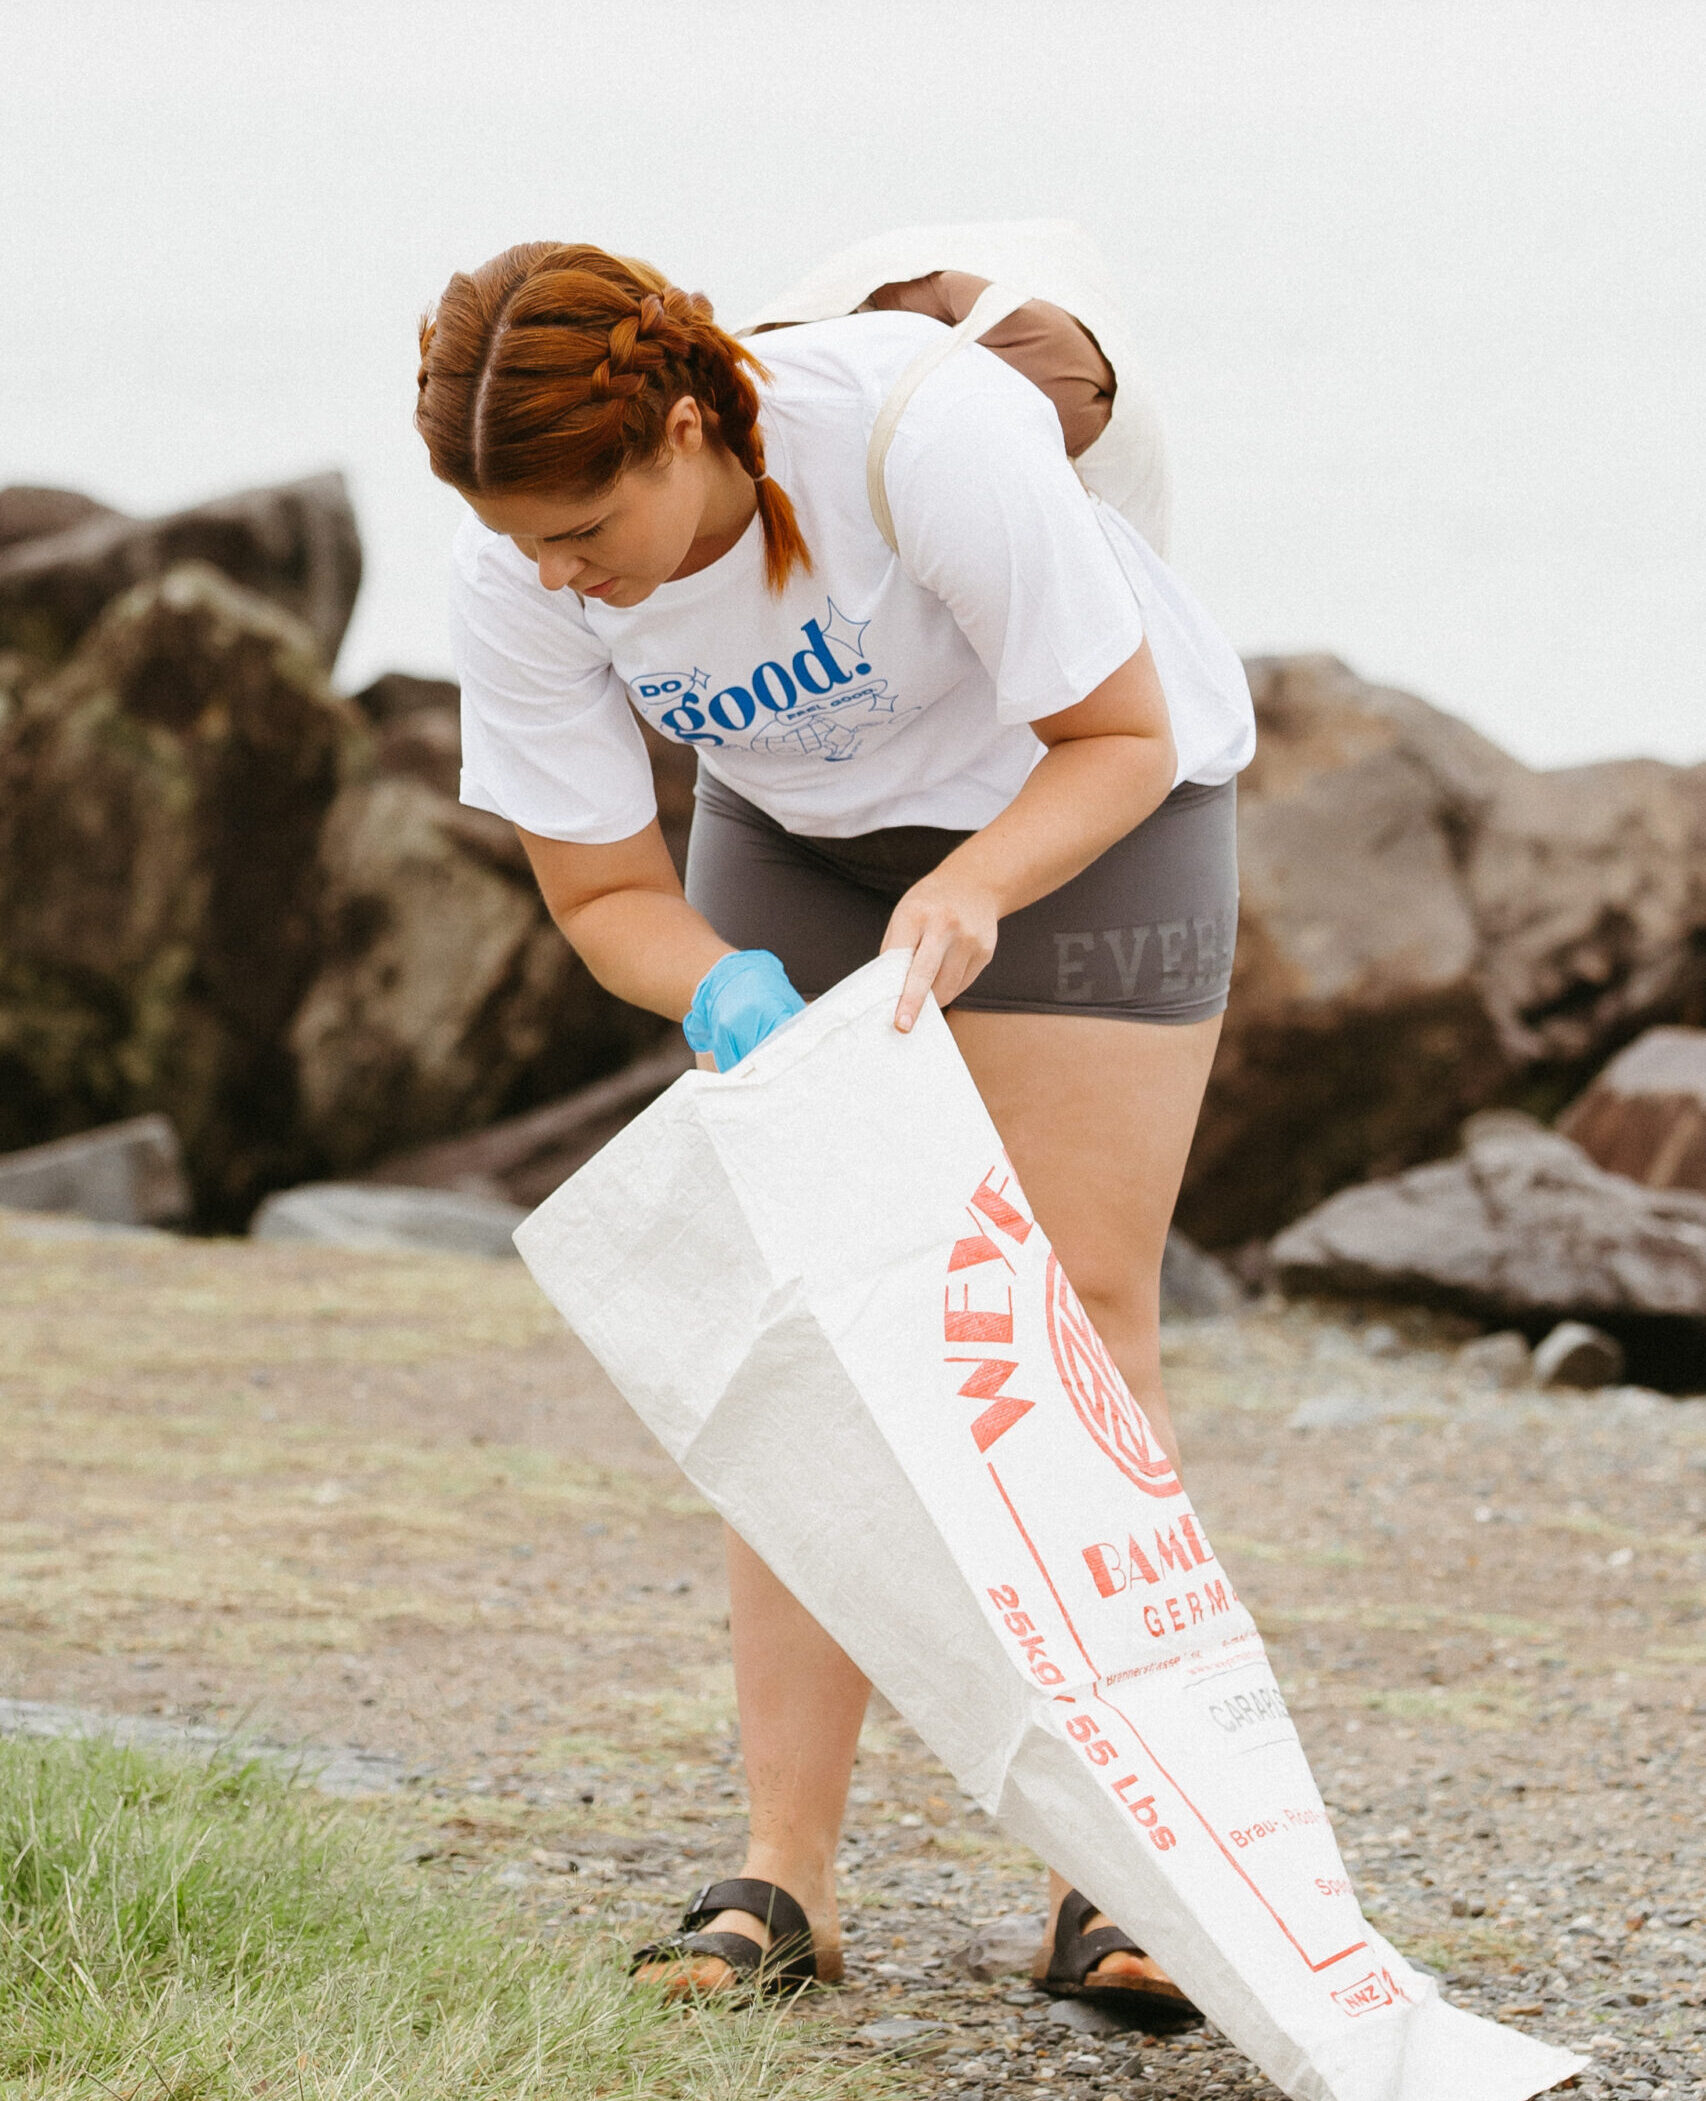 beach-cleanup-selfawear-volunteering-gold-coast-7